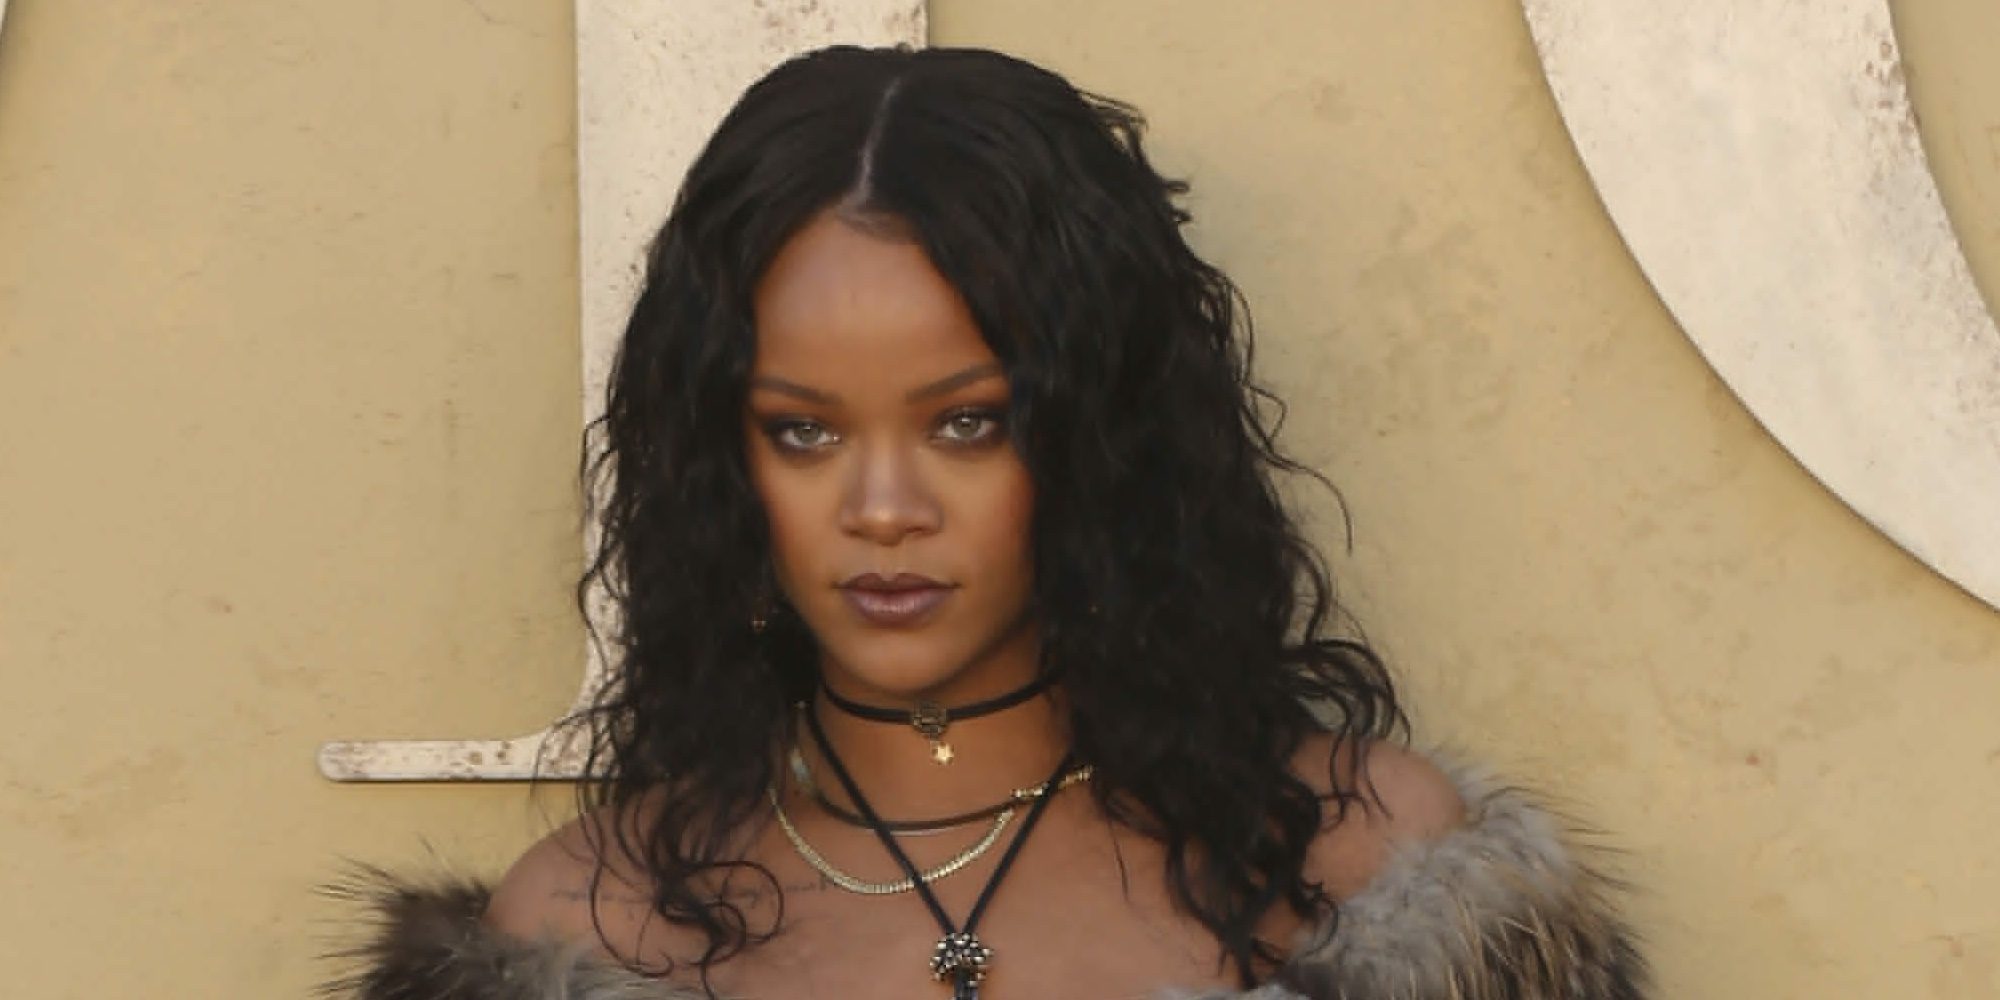 Rihanna, declarada persona 'non grata' en Senegal por un grupo islamista: "Forma parte de un plan demoníaco"